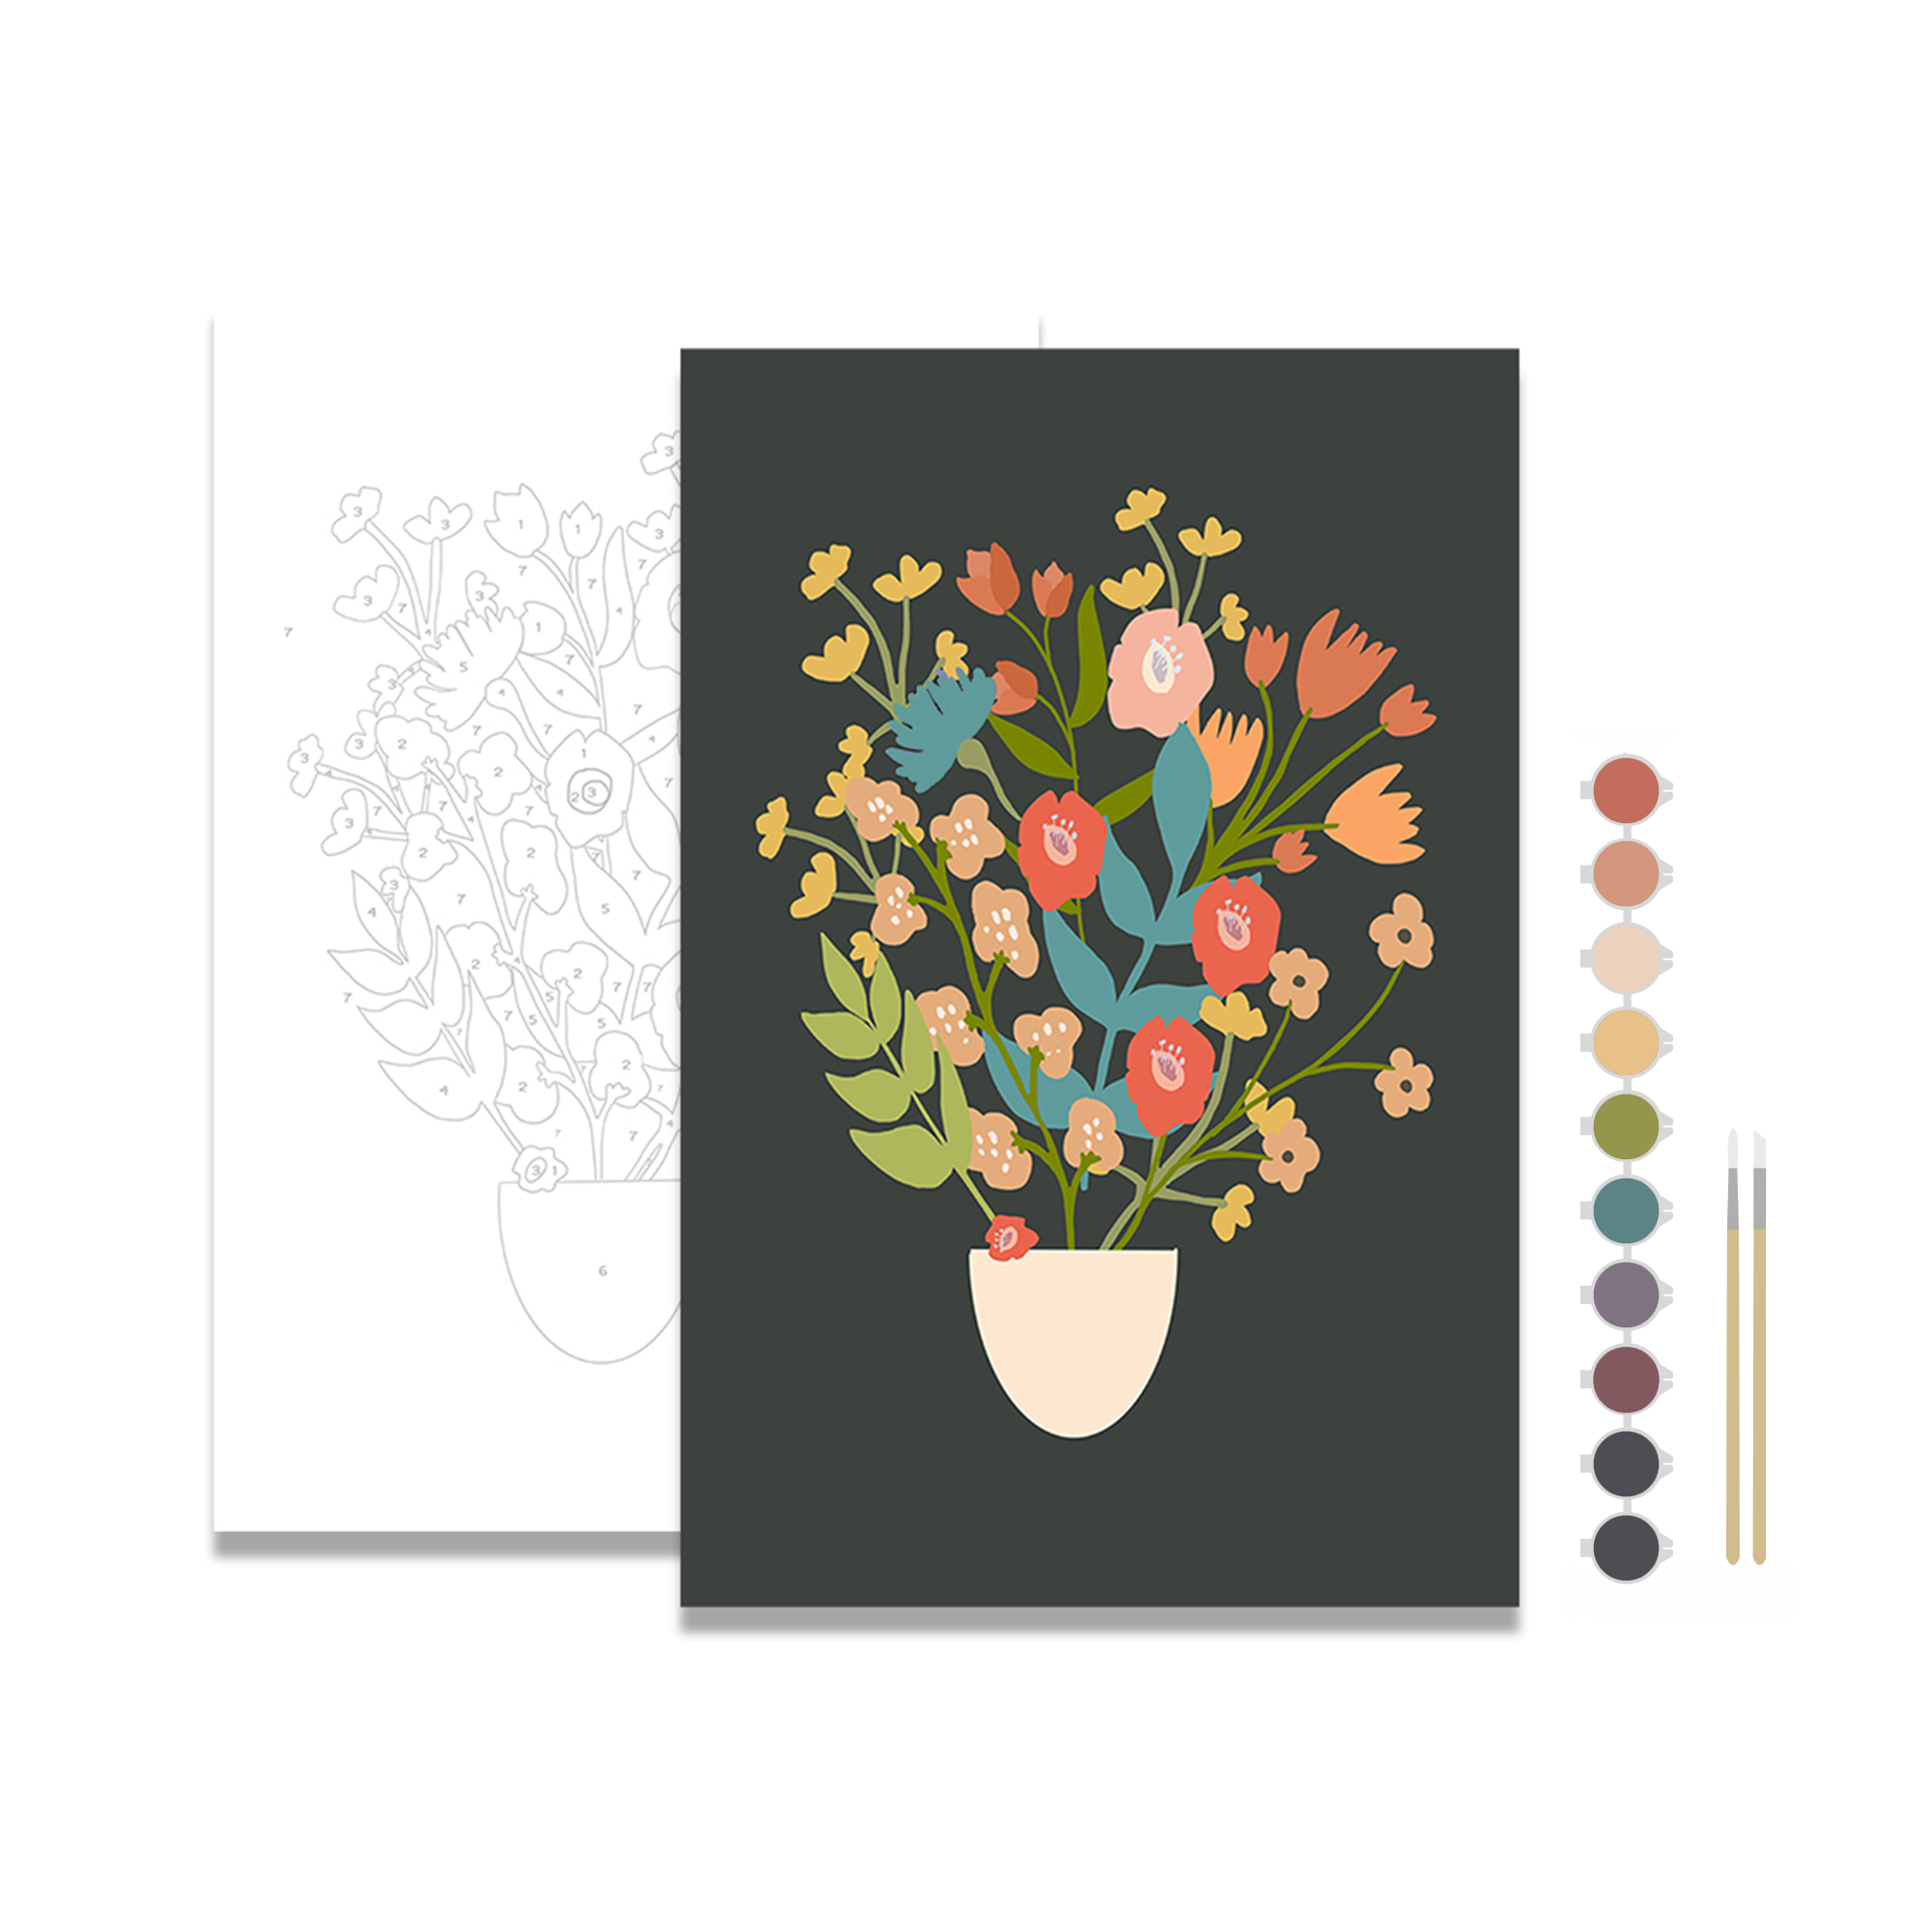 Flower Bouquet Meditative Art Paint by Number Kit: Paint by Number Kit